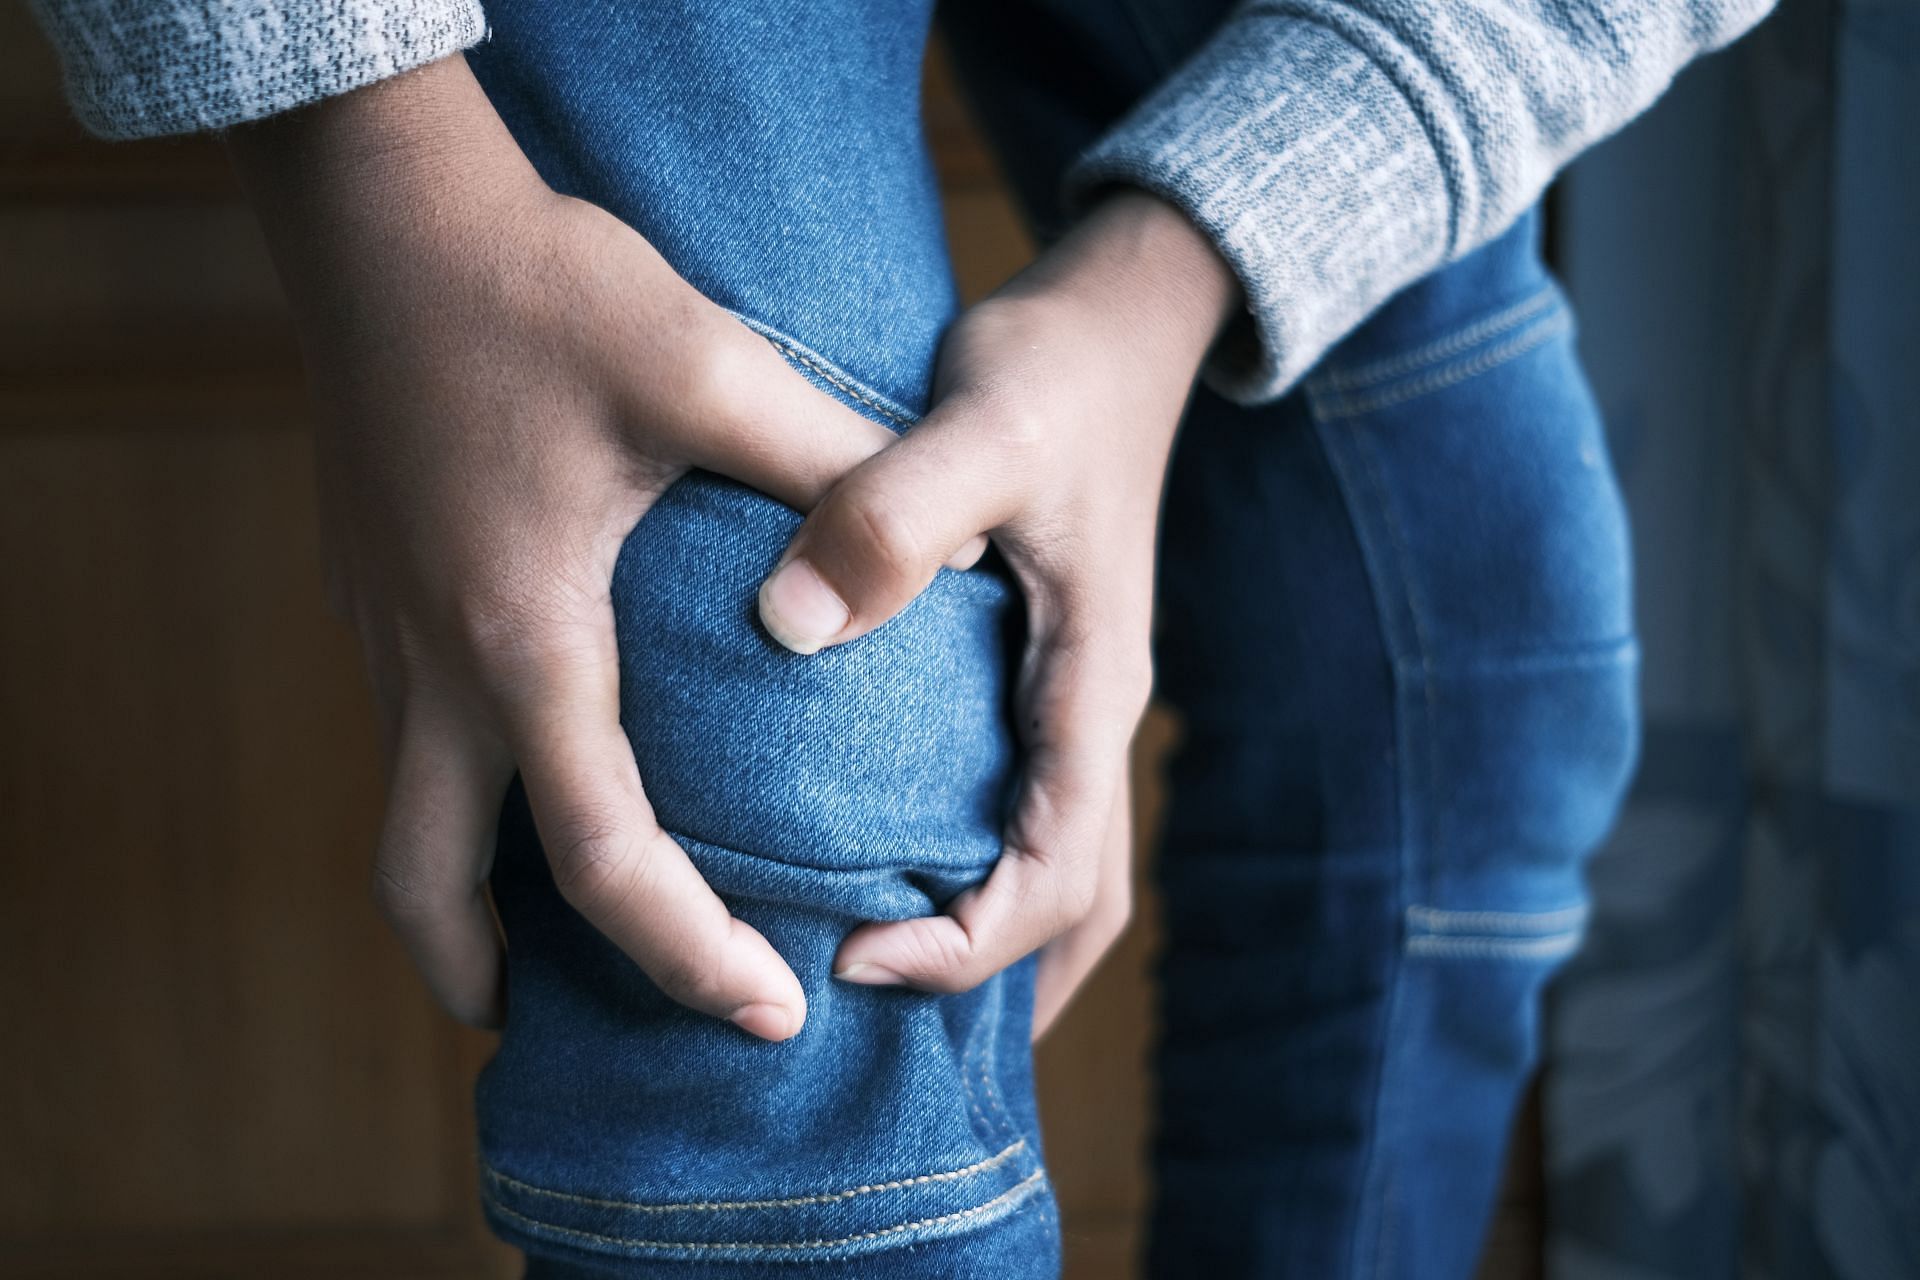 Common symptoms of gout include knee pain. (Image via Pexels/Towfiqu Barbhuiya)